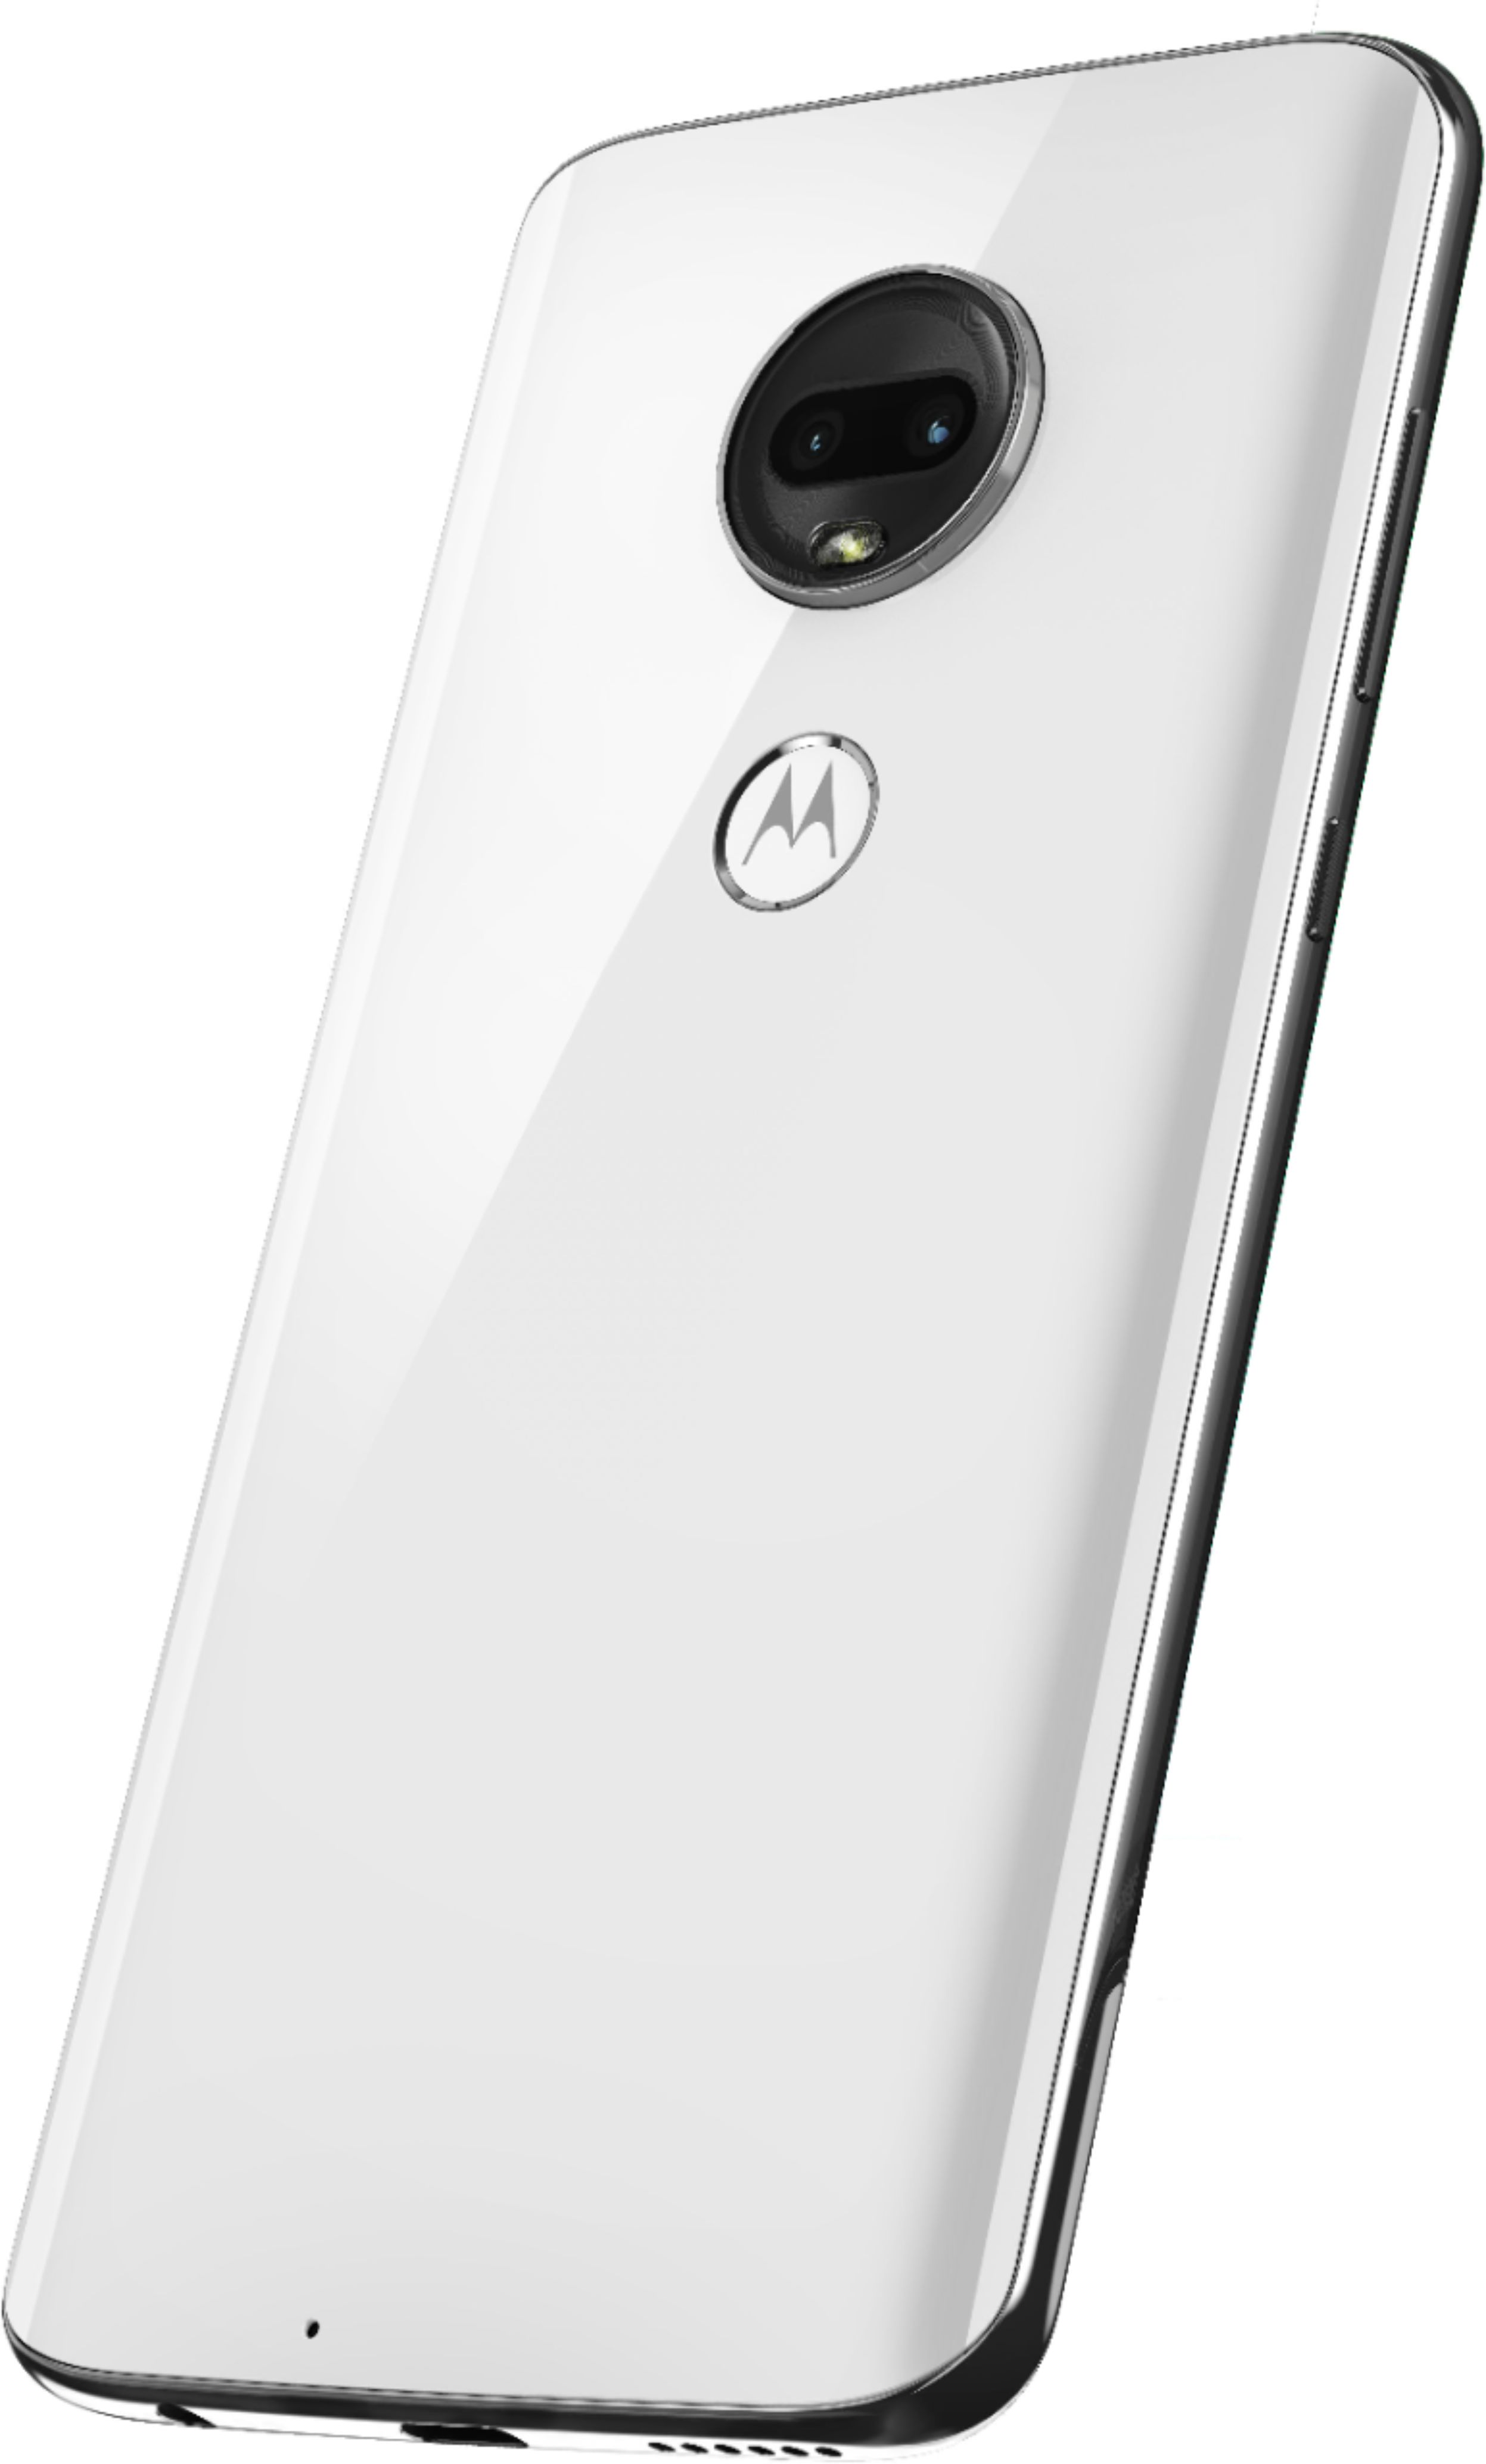 Motorola Moto G7 with 64GB Memory Cell Phone (Unlocked